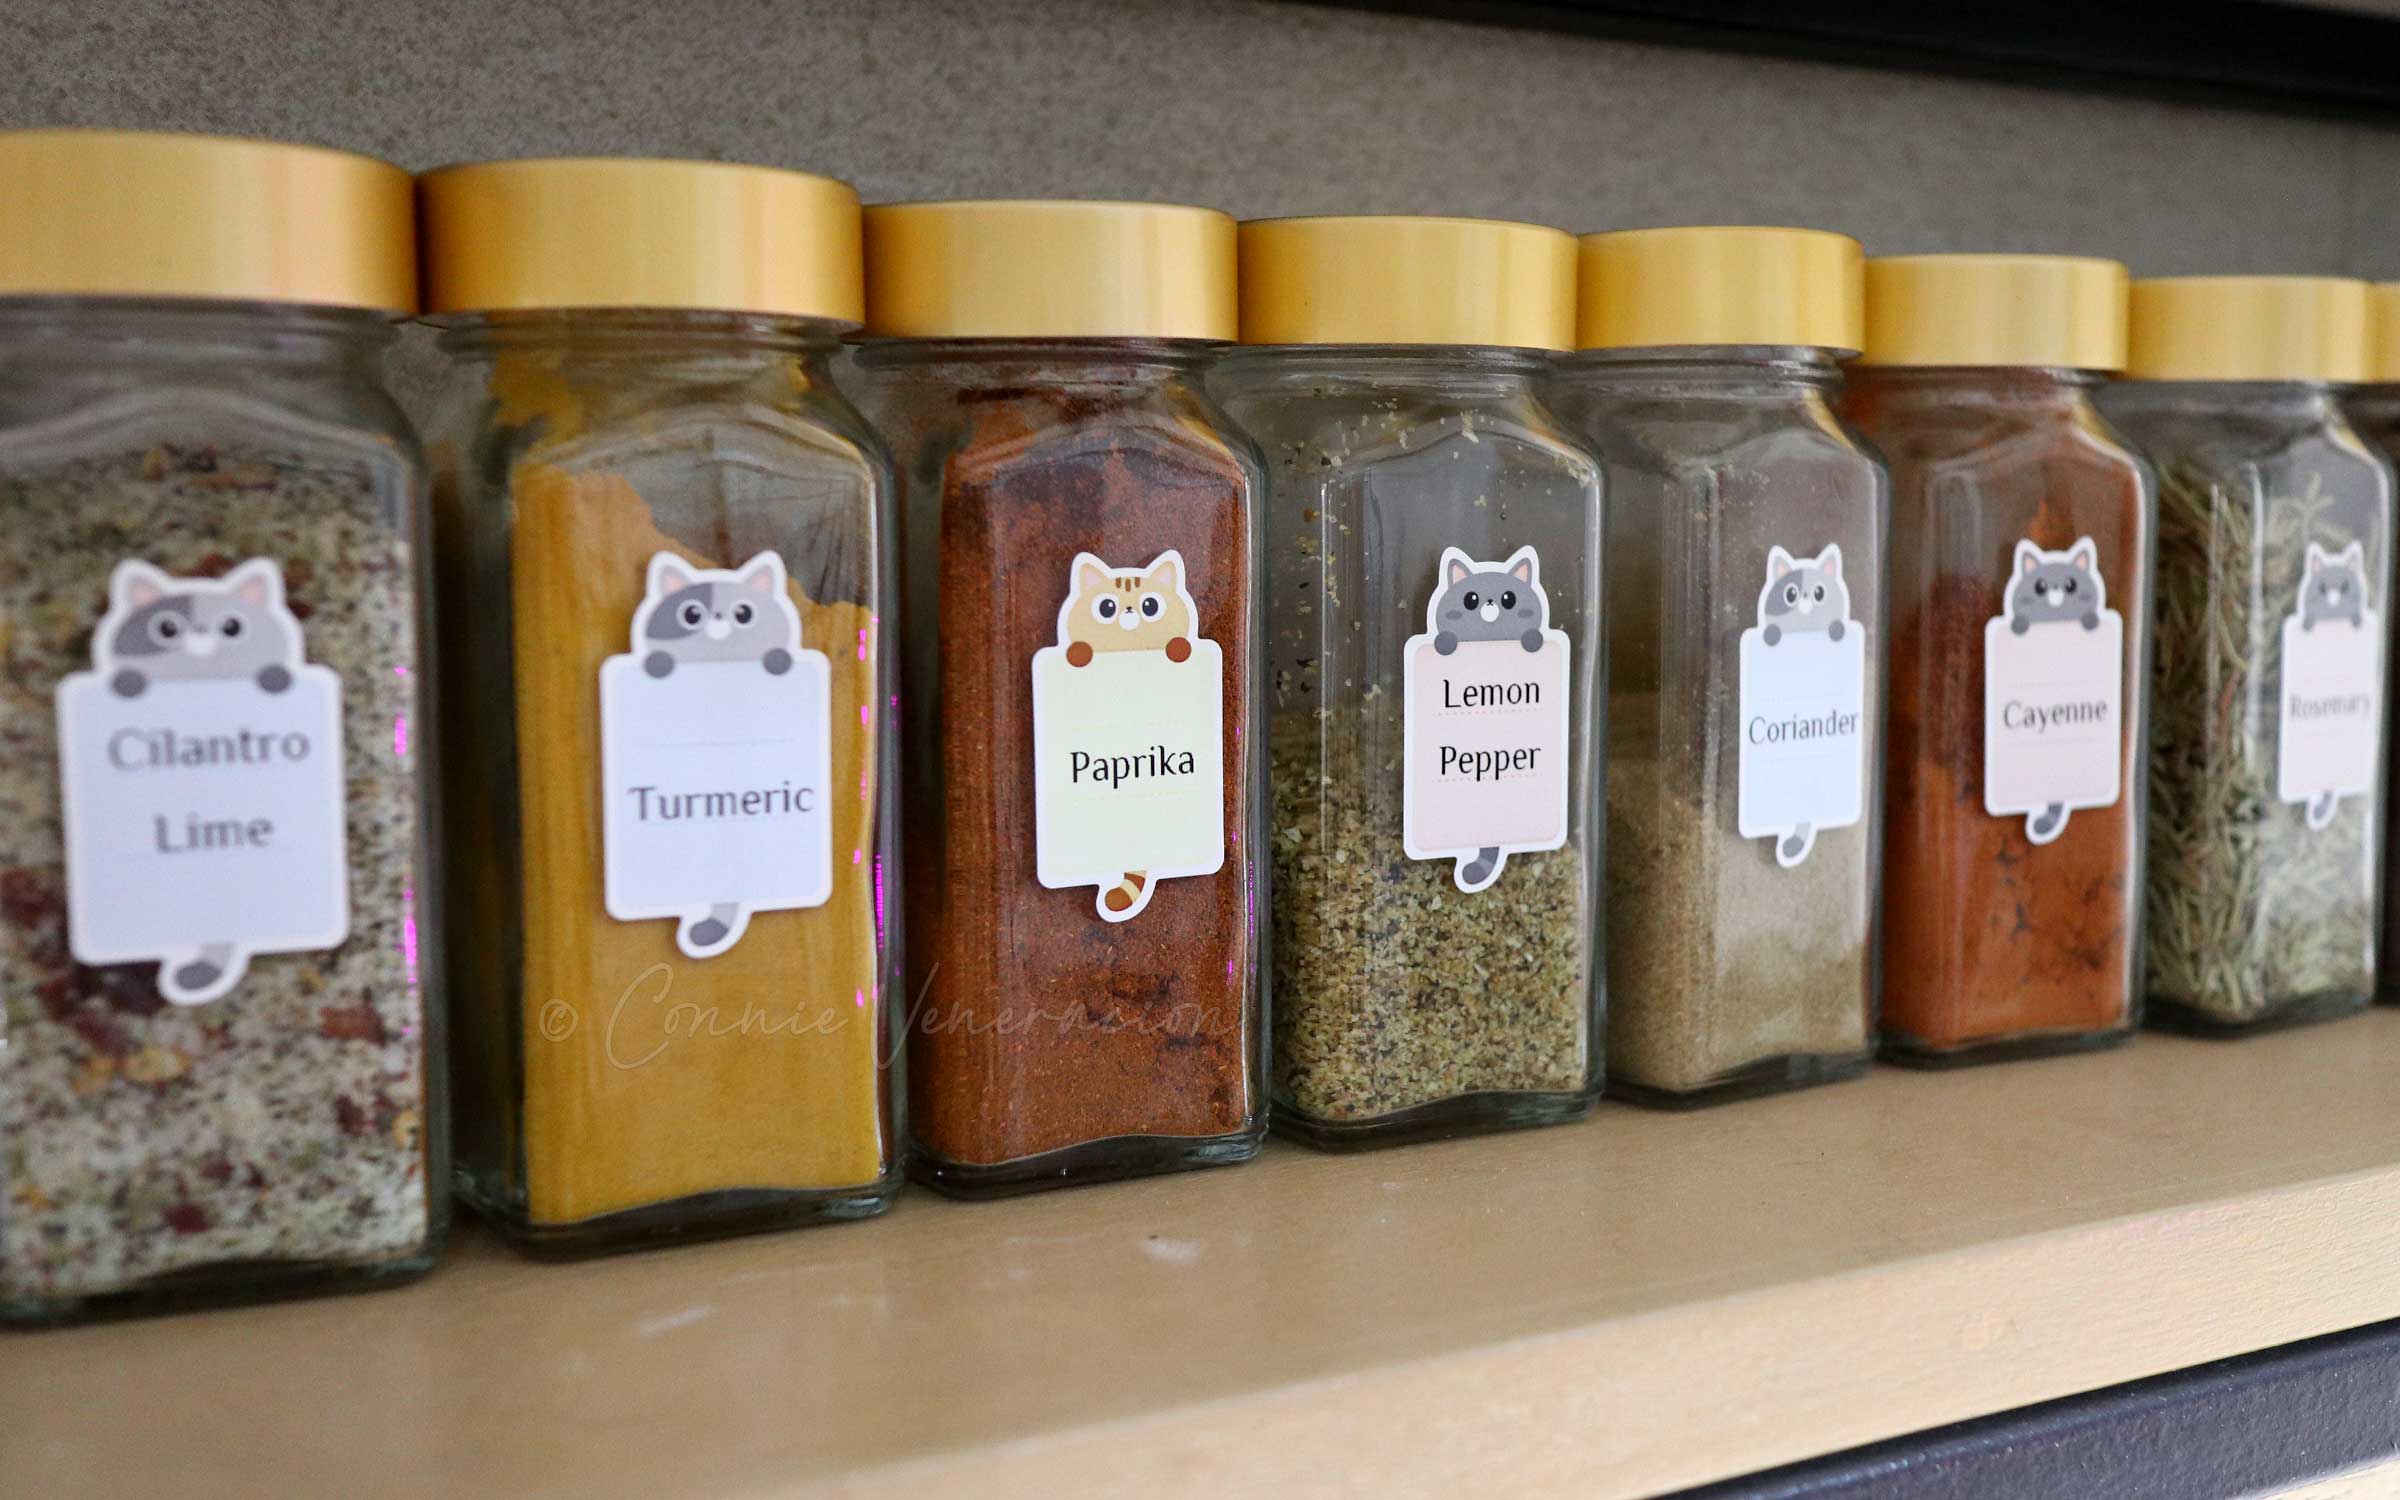 Build a Countertop Spice Storage Bin + Printable Spice Labels